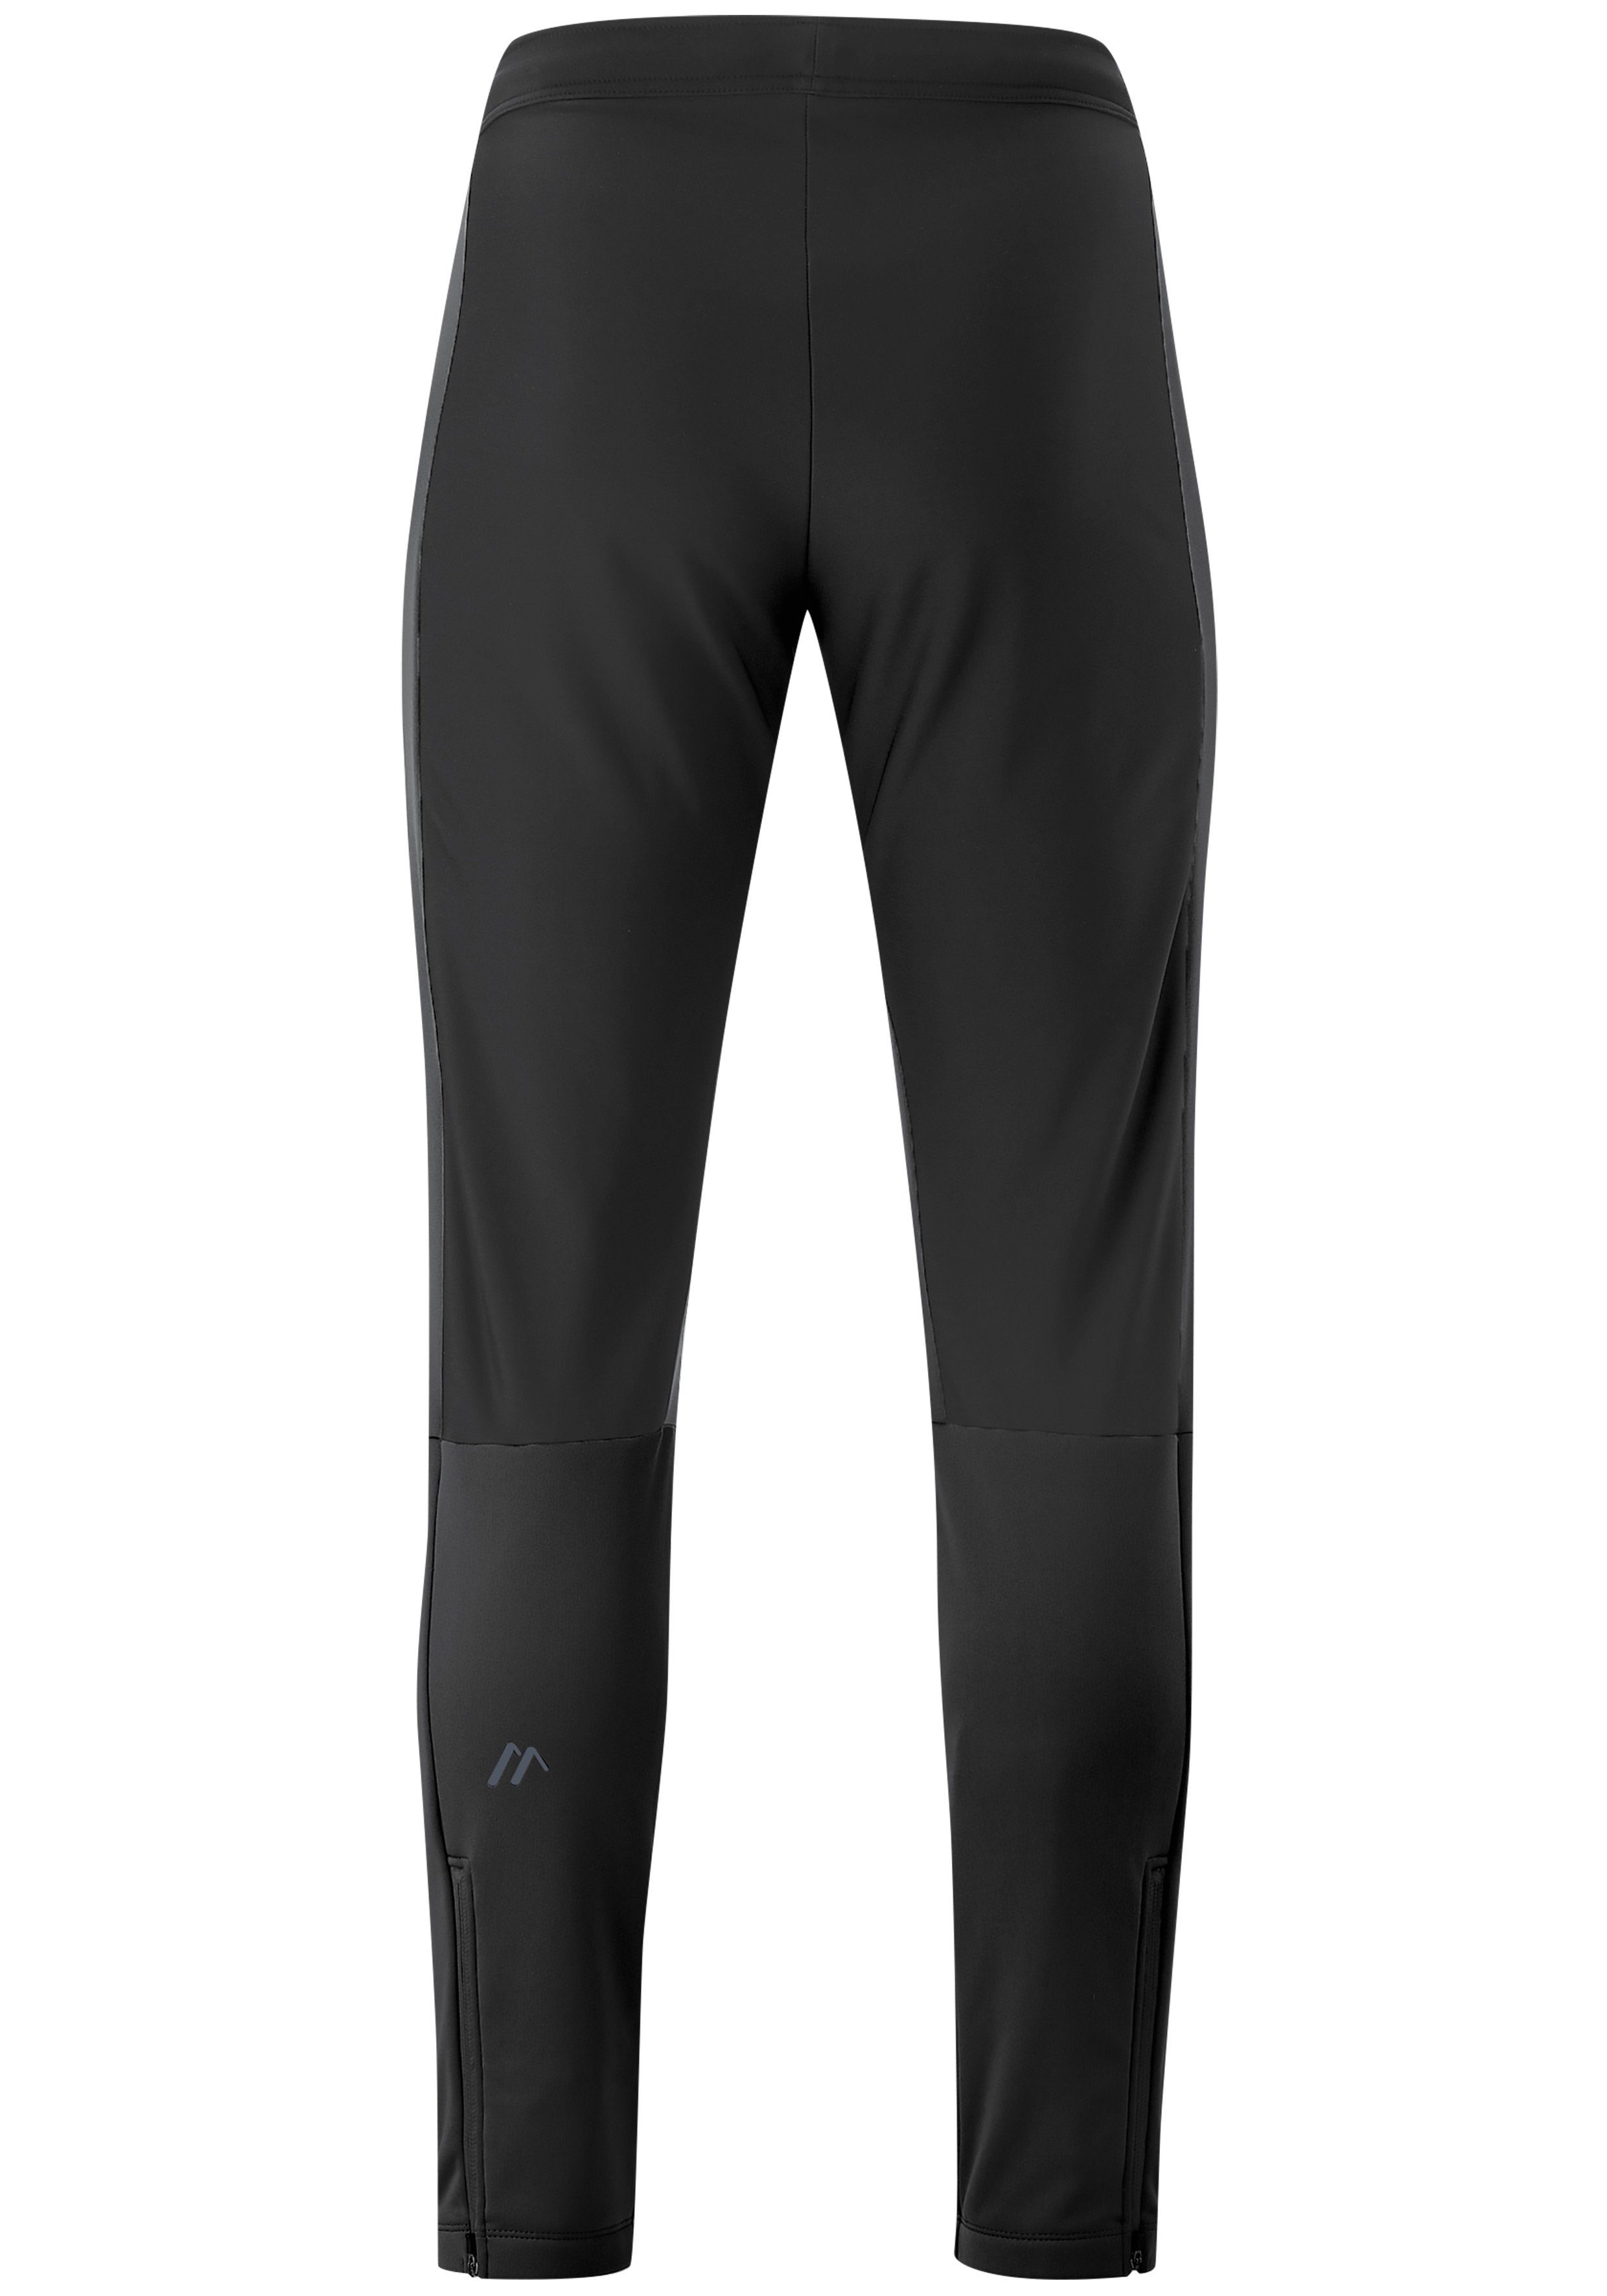 Sports Malselv Schnitt Softshell-Hose Slim-Fit Pants Maier komfortable modernen dunkelgrau in M Softshellhose